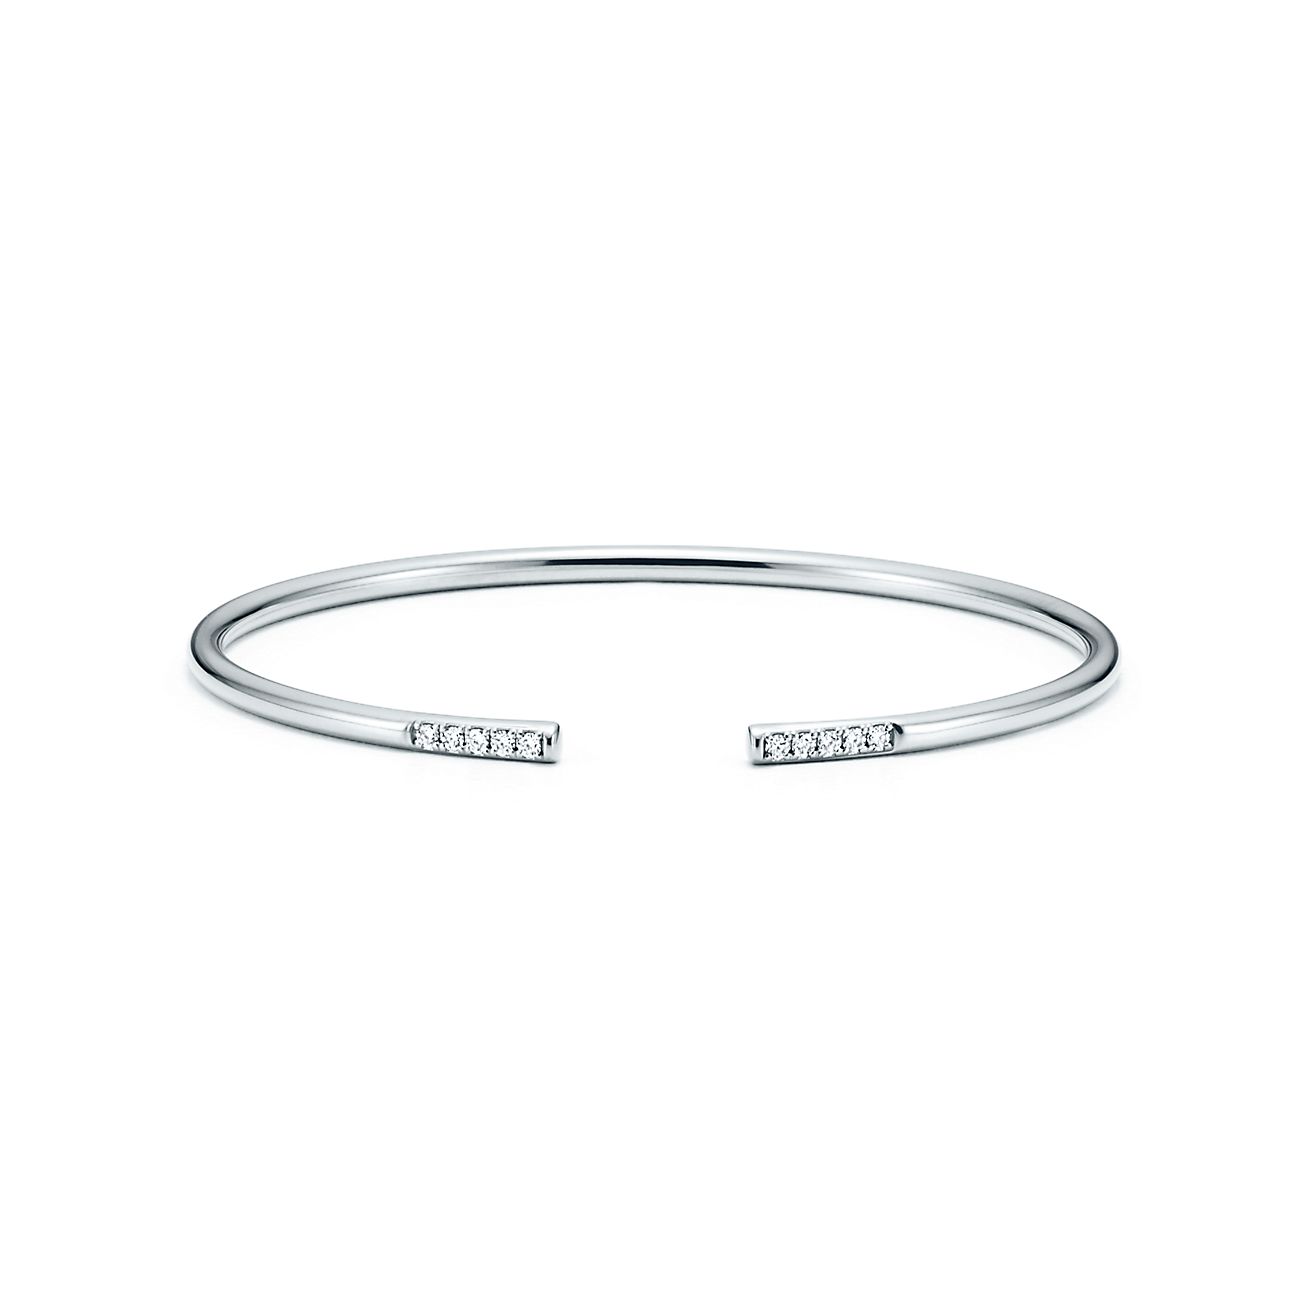 Tiffany Metro wire bracelet in 18k 